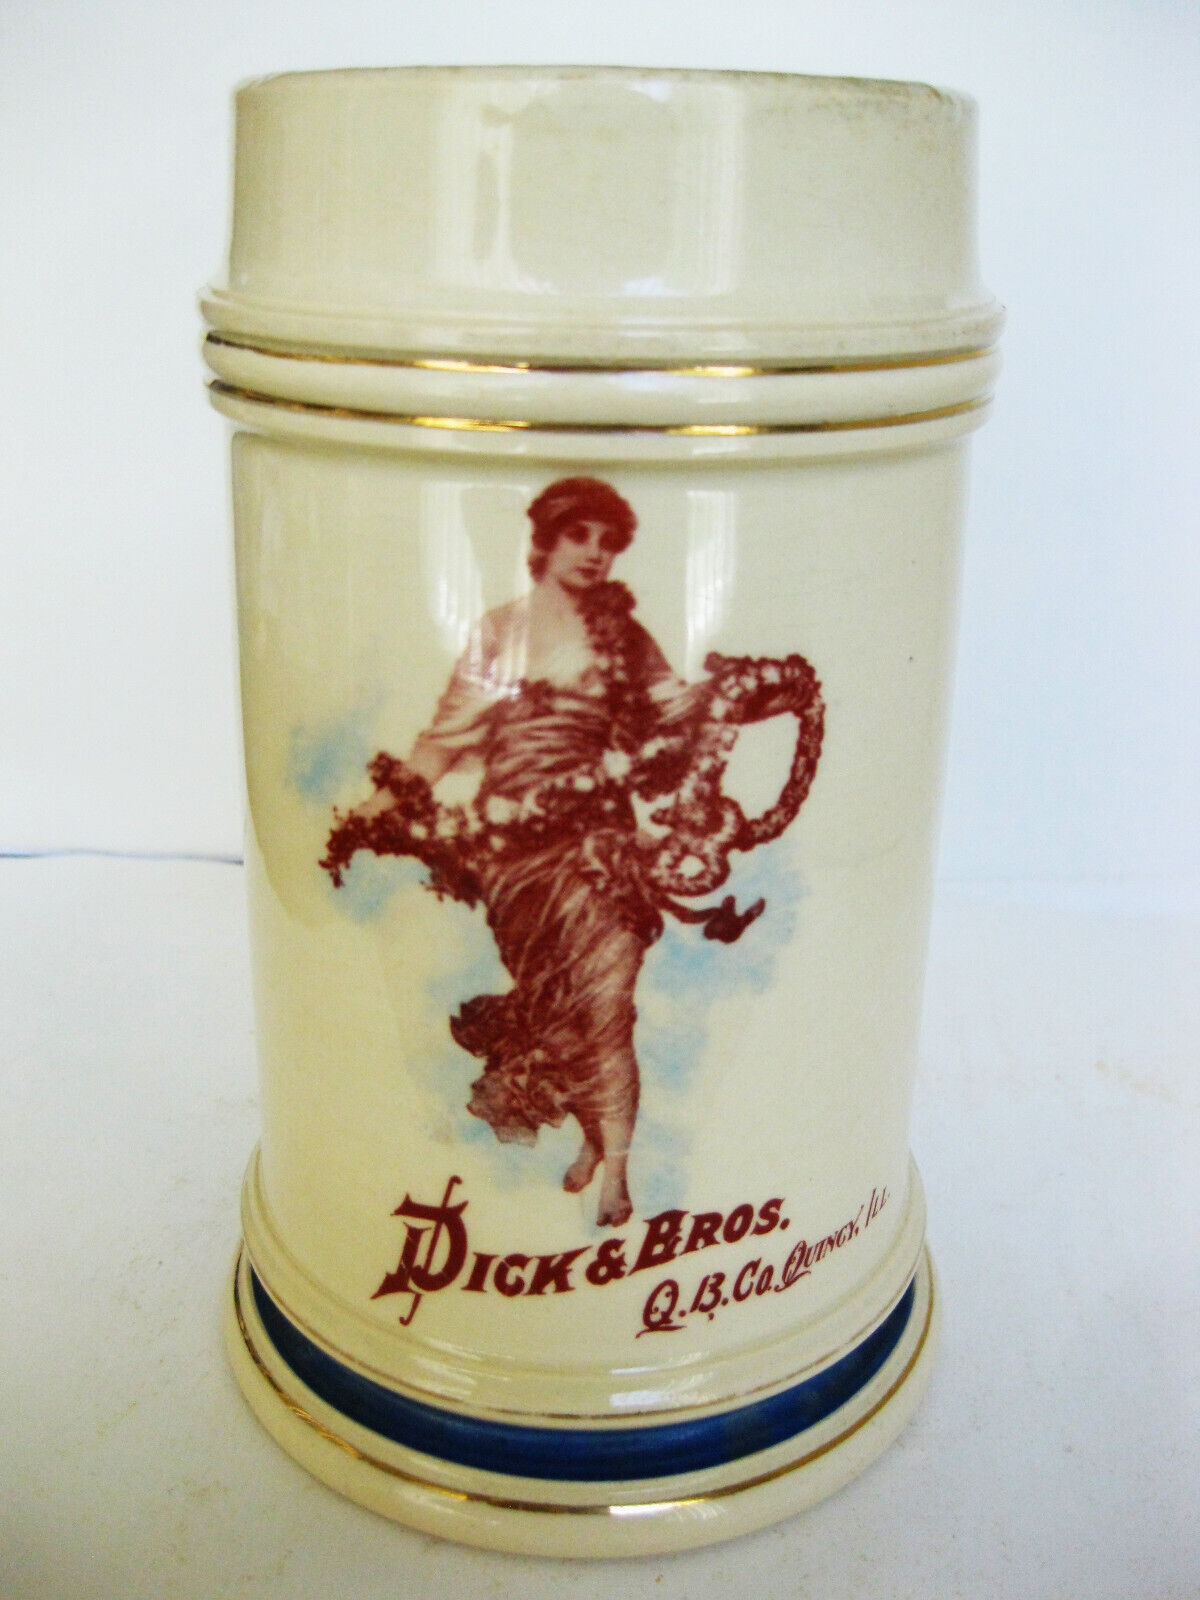 DICK & BROS Q.B. Quincy, ILL. vintage beer mug